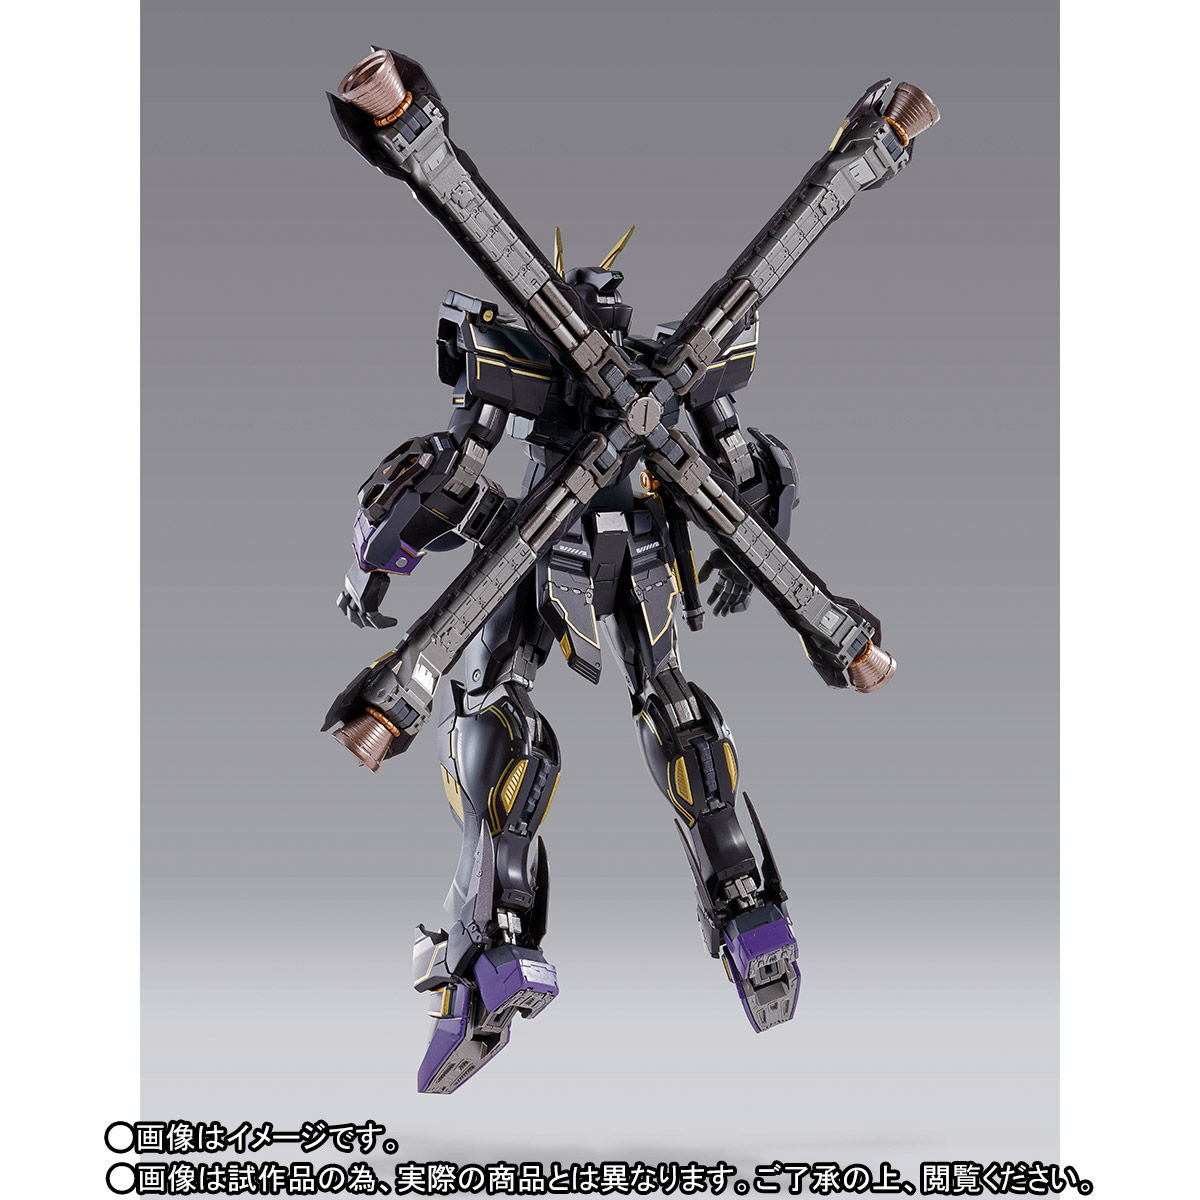 METAL BUILD『クロスボーン・ガンダムX2』機動戦士クロスボーン・ガンダム 可動フィギュア-009